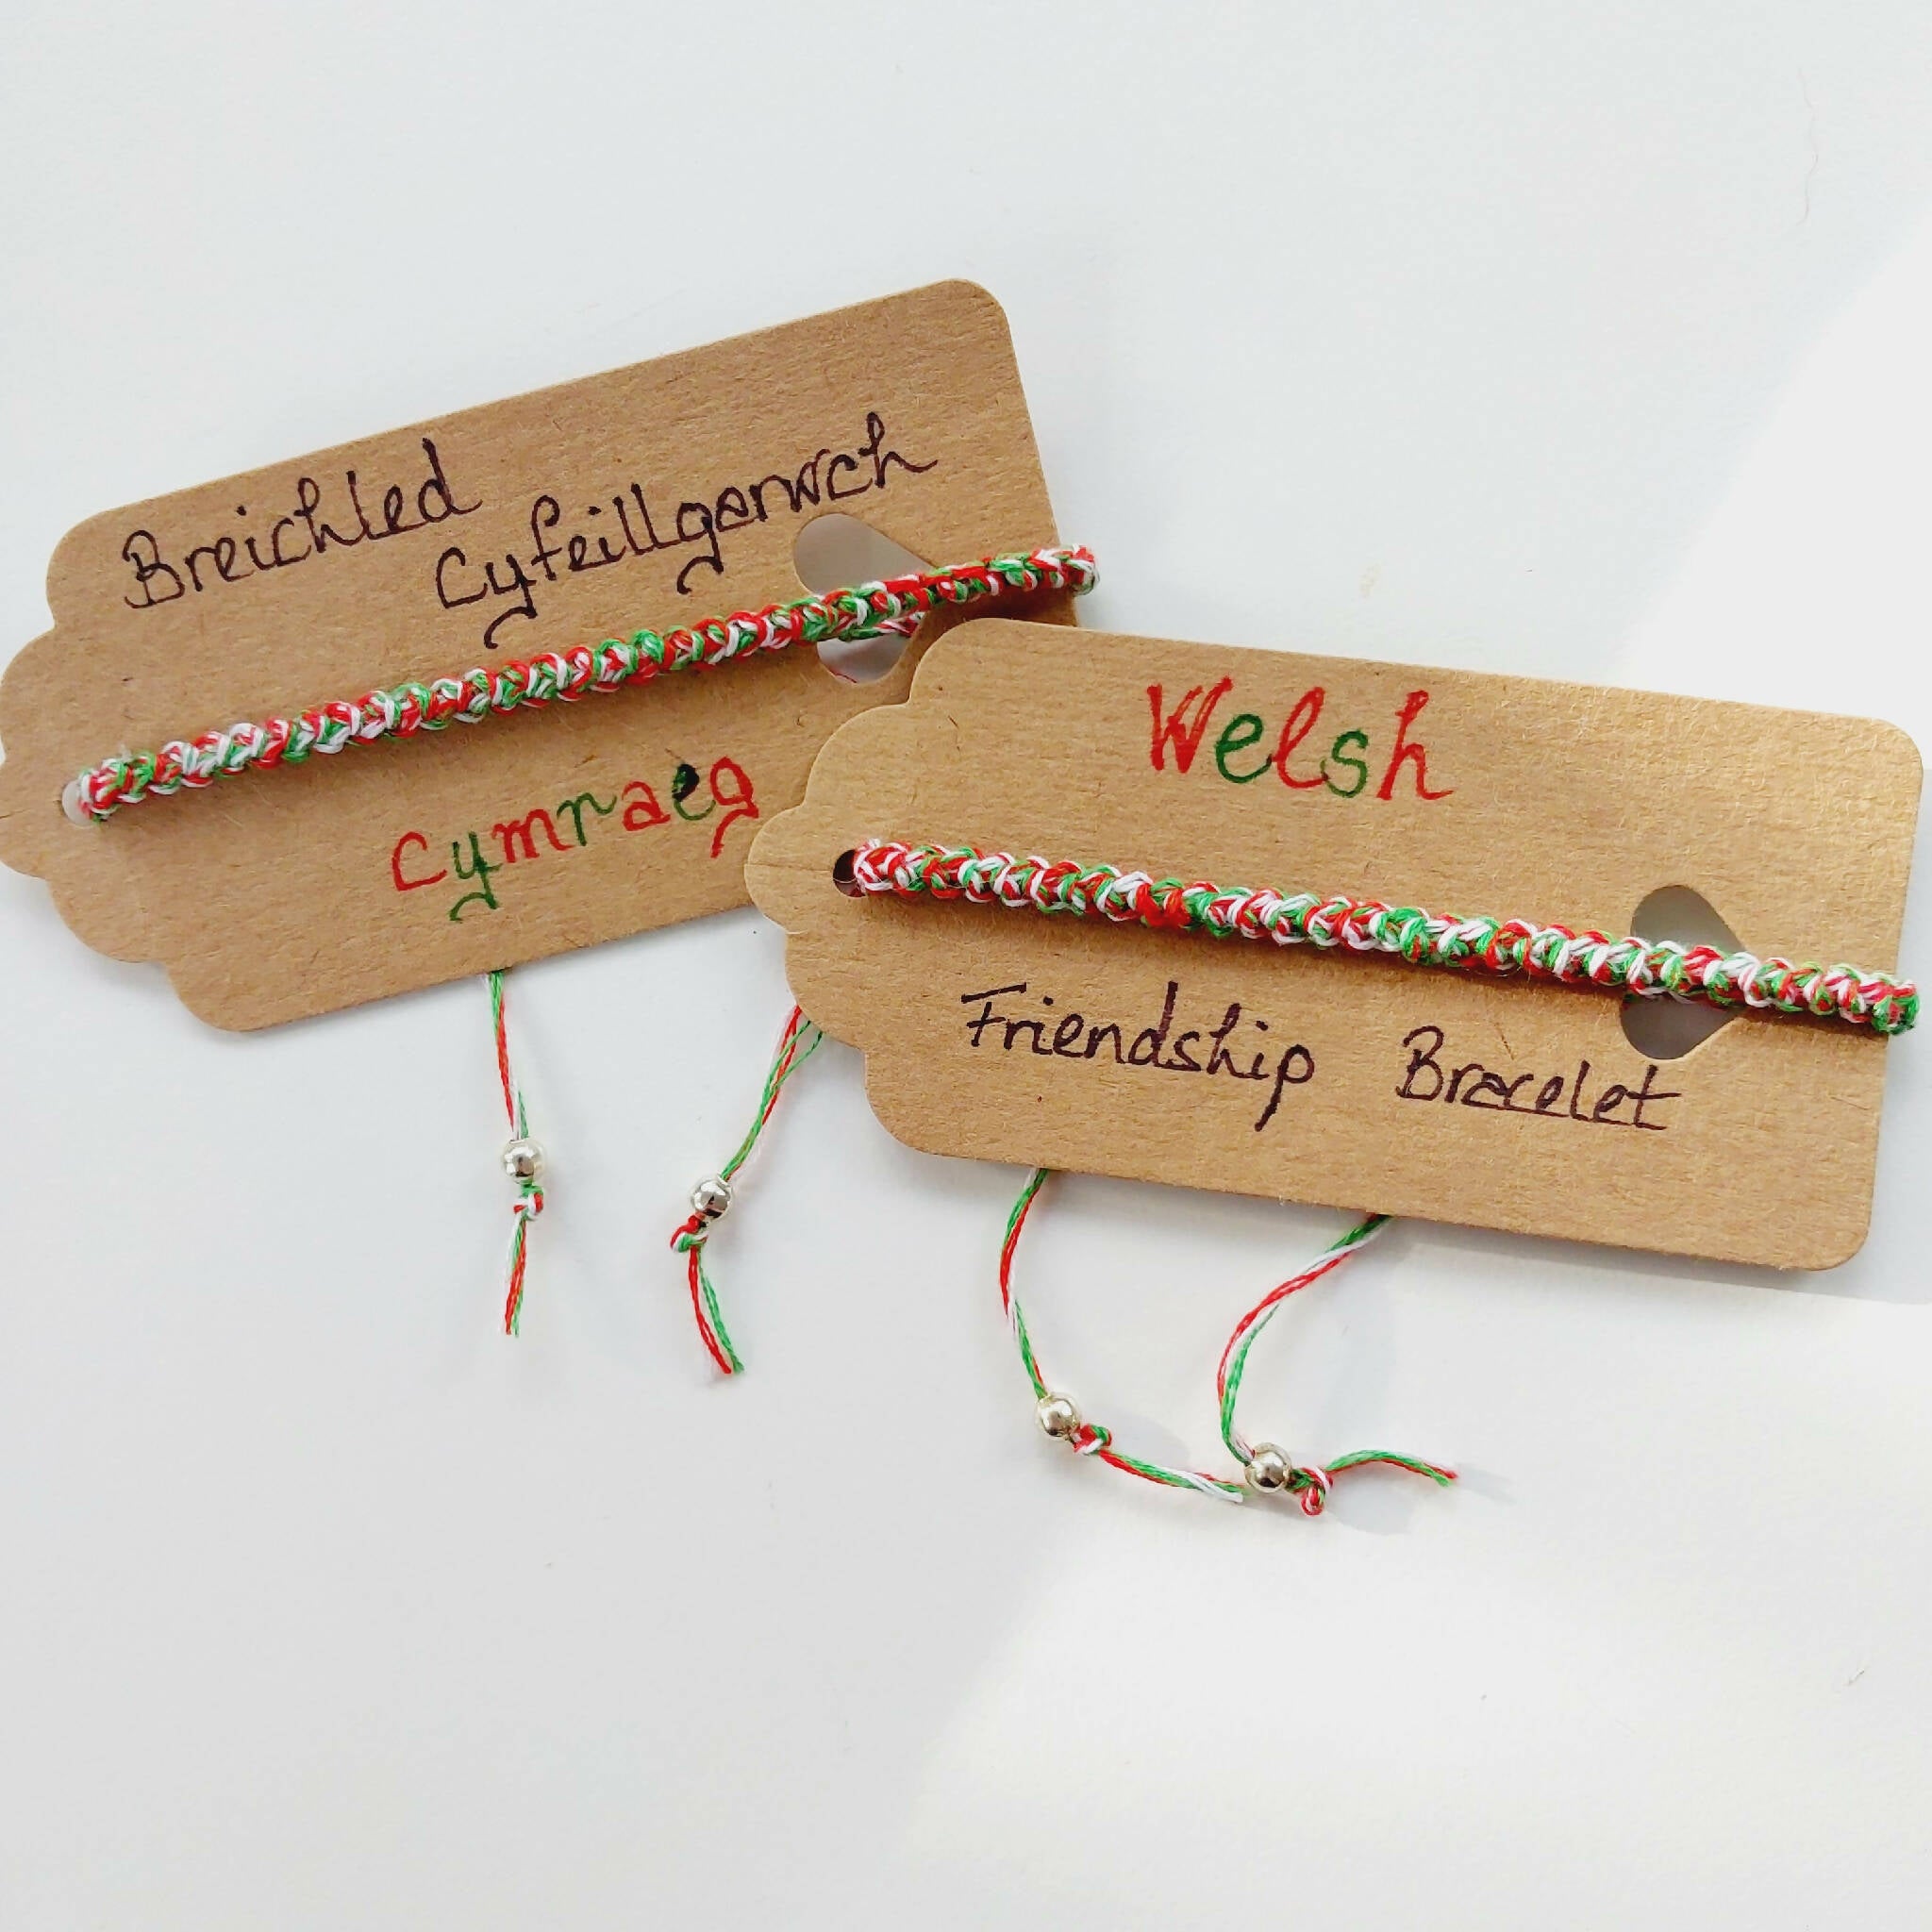 Welsh Bracelets tags